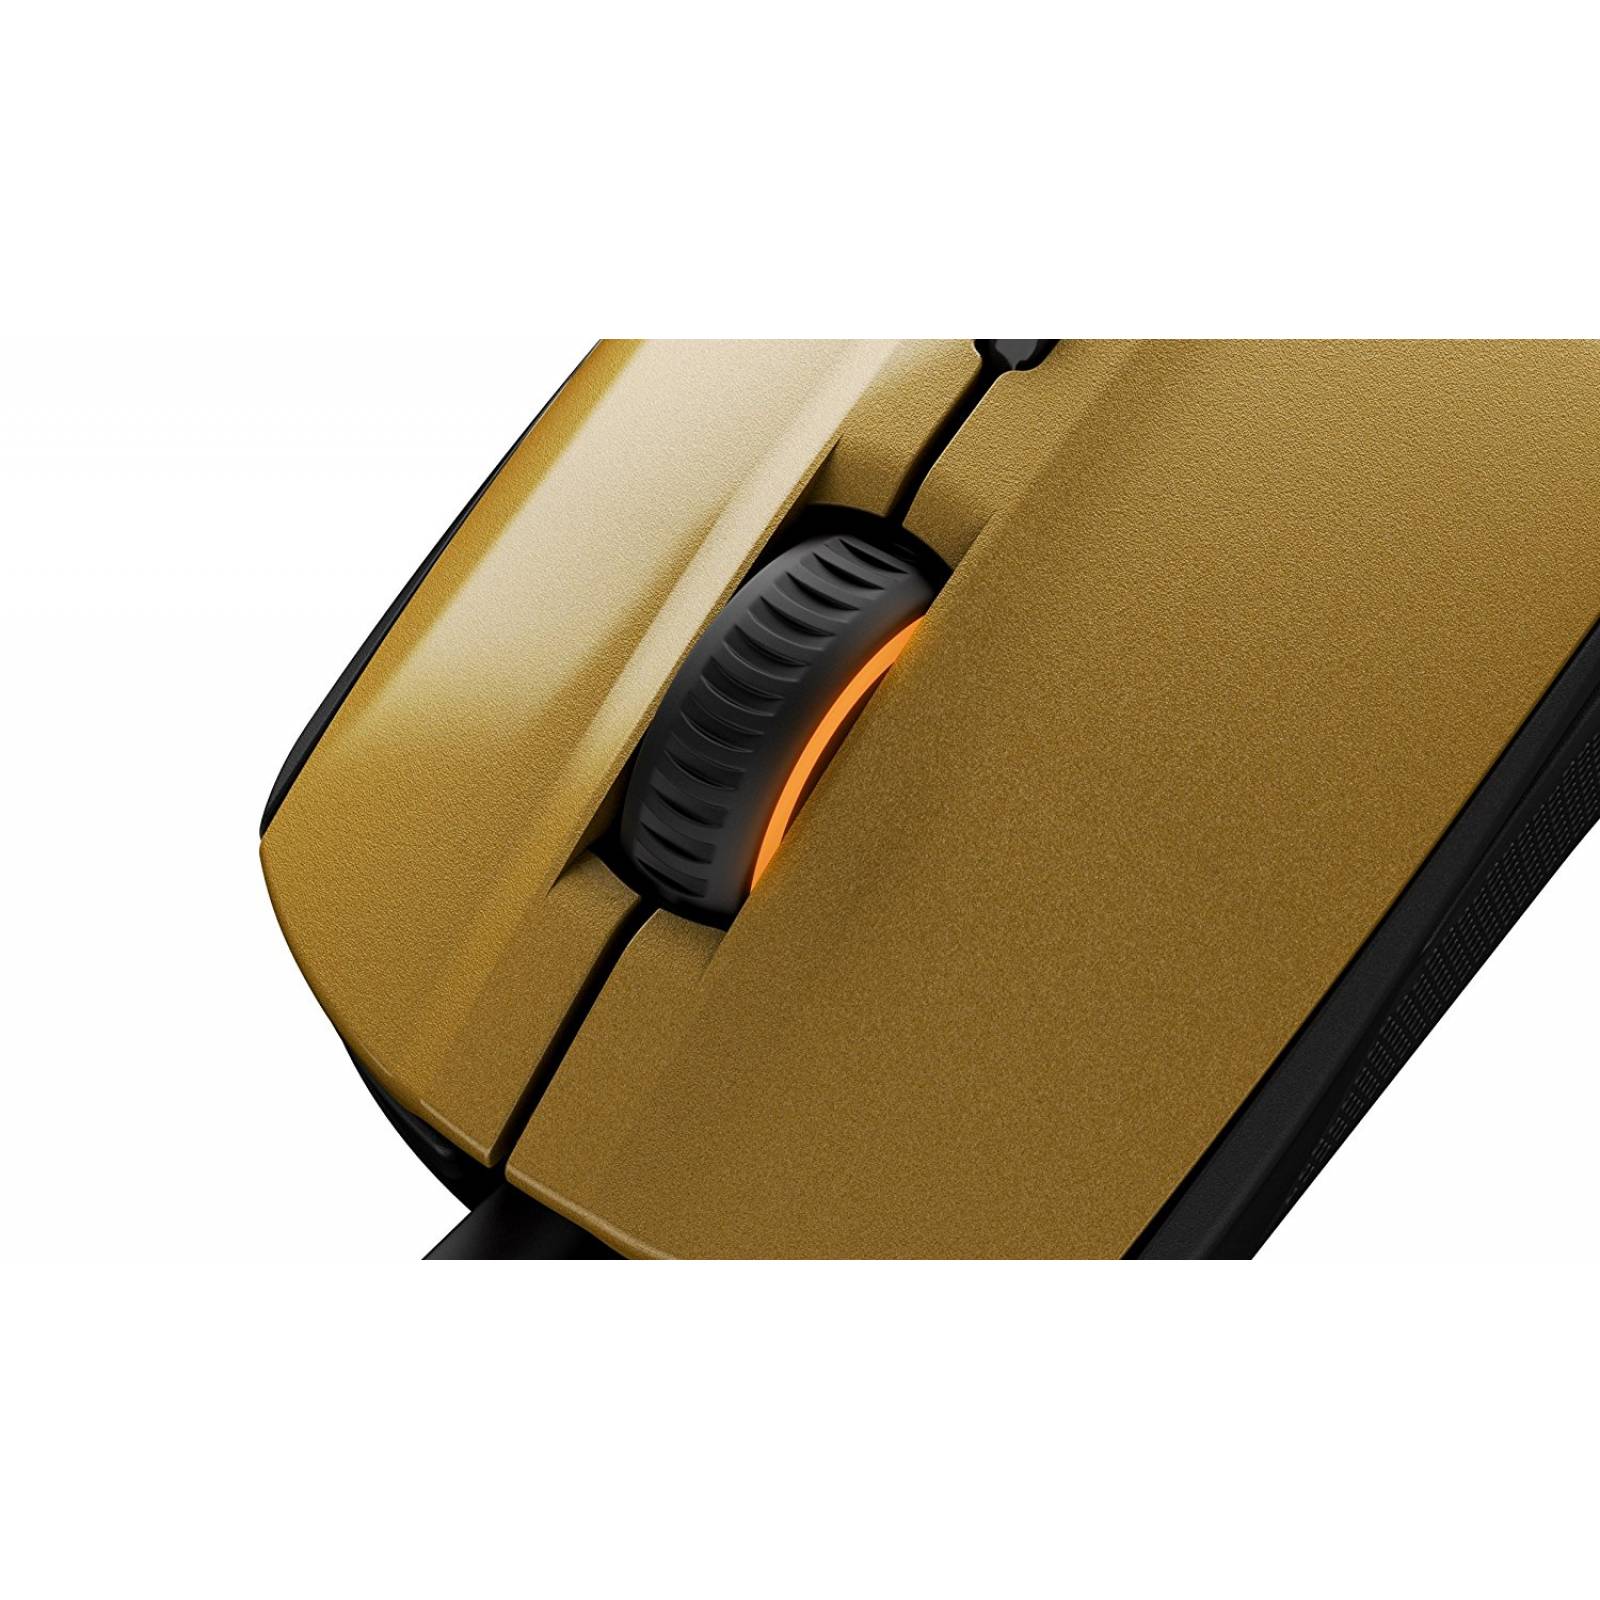 Mouse Gamer Steelseries Rival 100 Optico 4000 Dpi -dorado